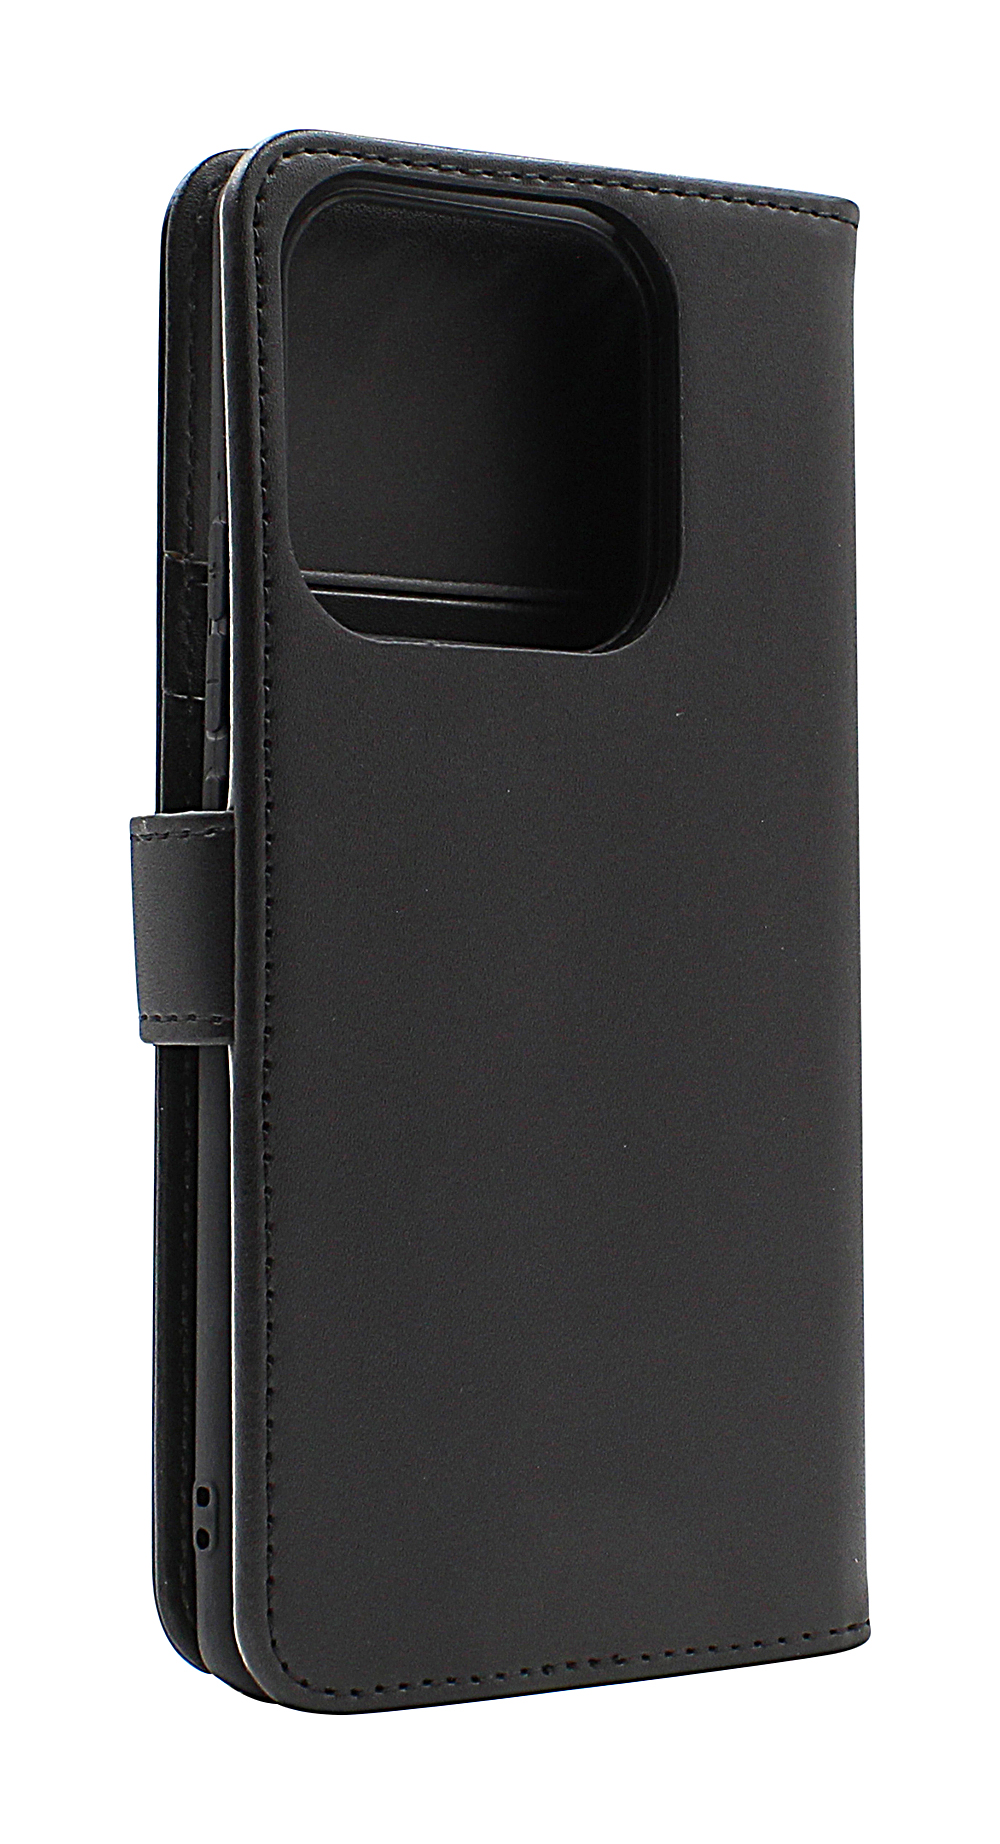 Skimblocker Magnet Wallet Xiaomi 13 Pro 5G